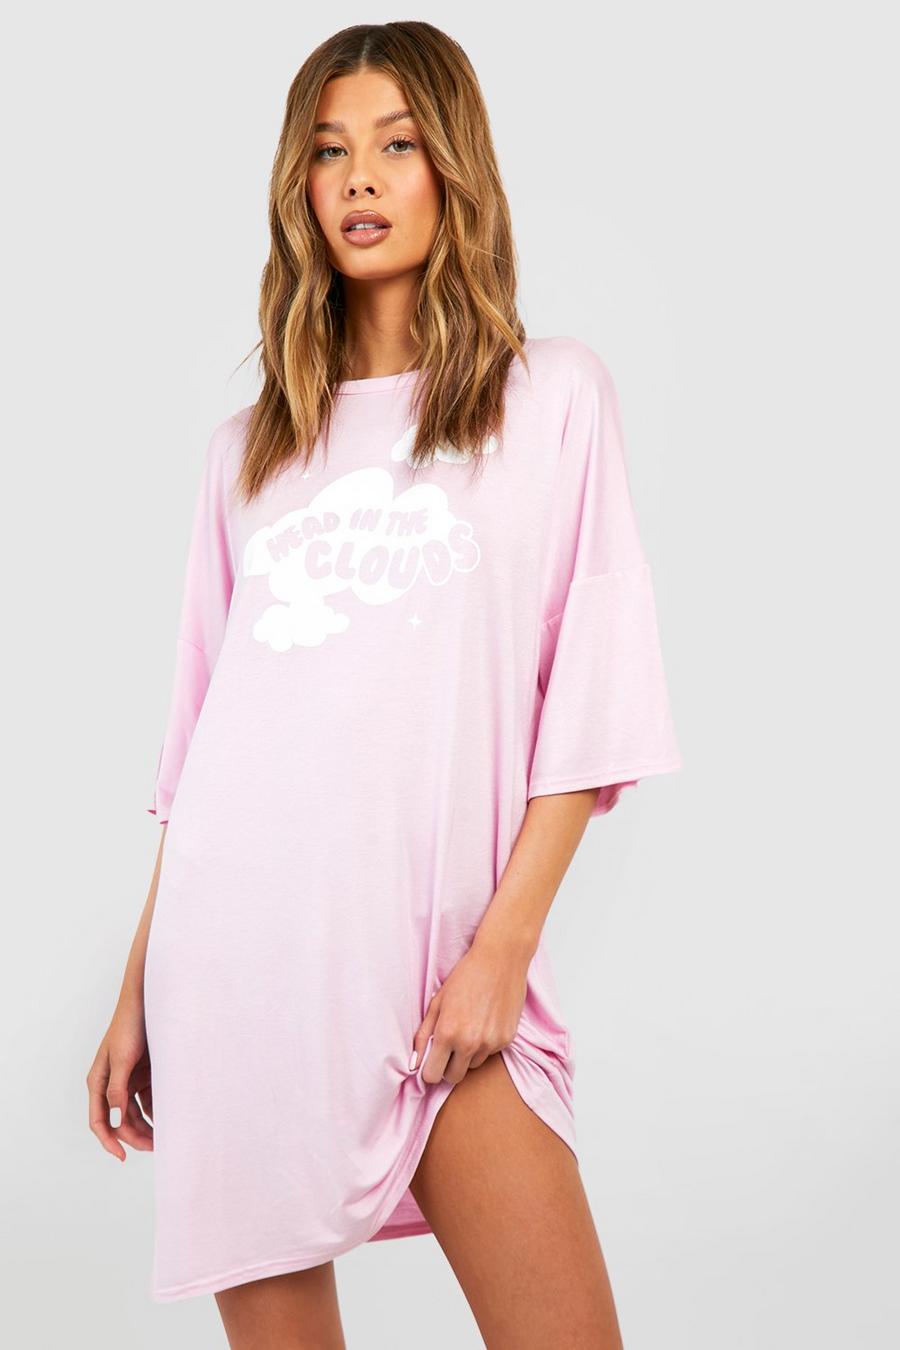 https://media.boohoo.com/i/boohoo/gzz48004_pink_xl/female-pink-oversized-slogan-sleep-t-shirt--/?w=900&qlt=default&fmt.jp2.qlt=70&fmt=auto&sm=fit